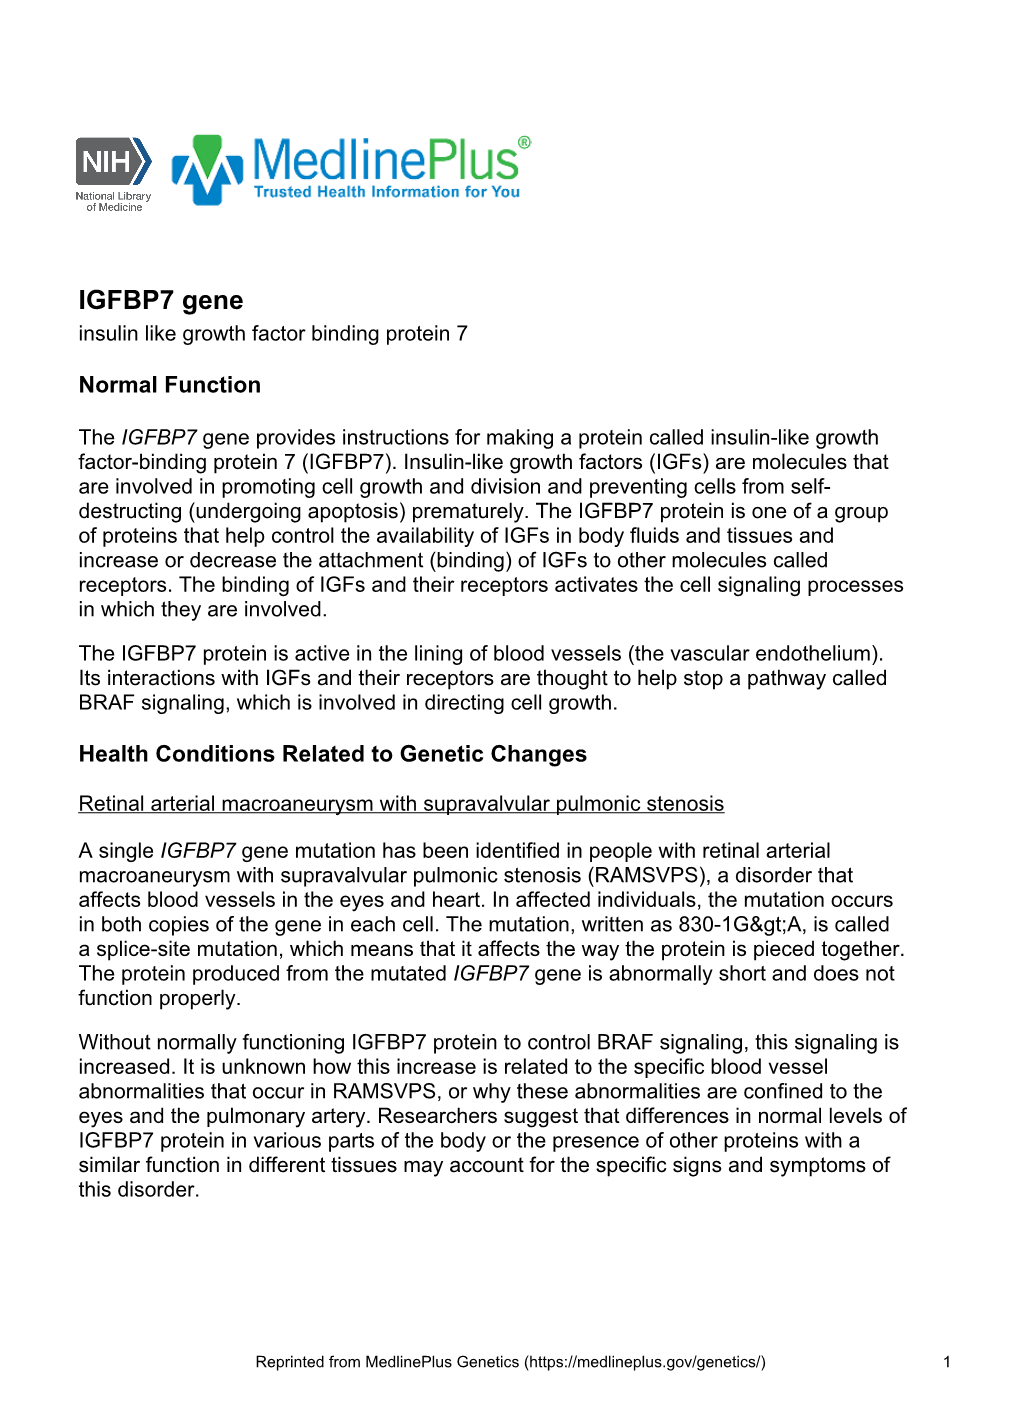 IGFBP7 Gene Insulin Like Growth Factor Binding Protein 7